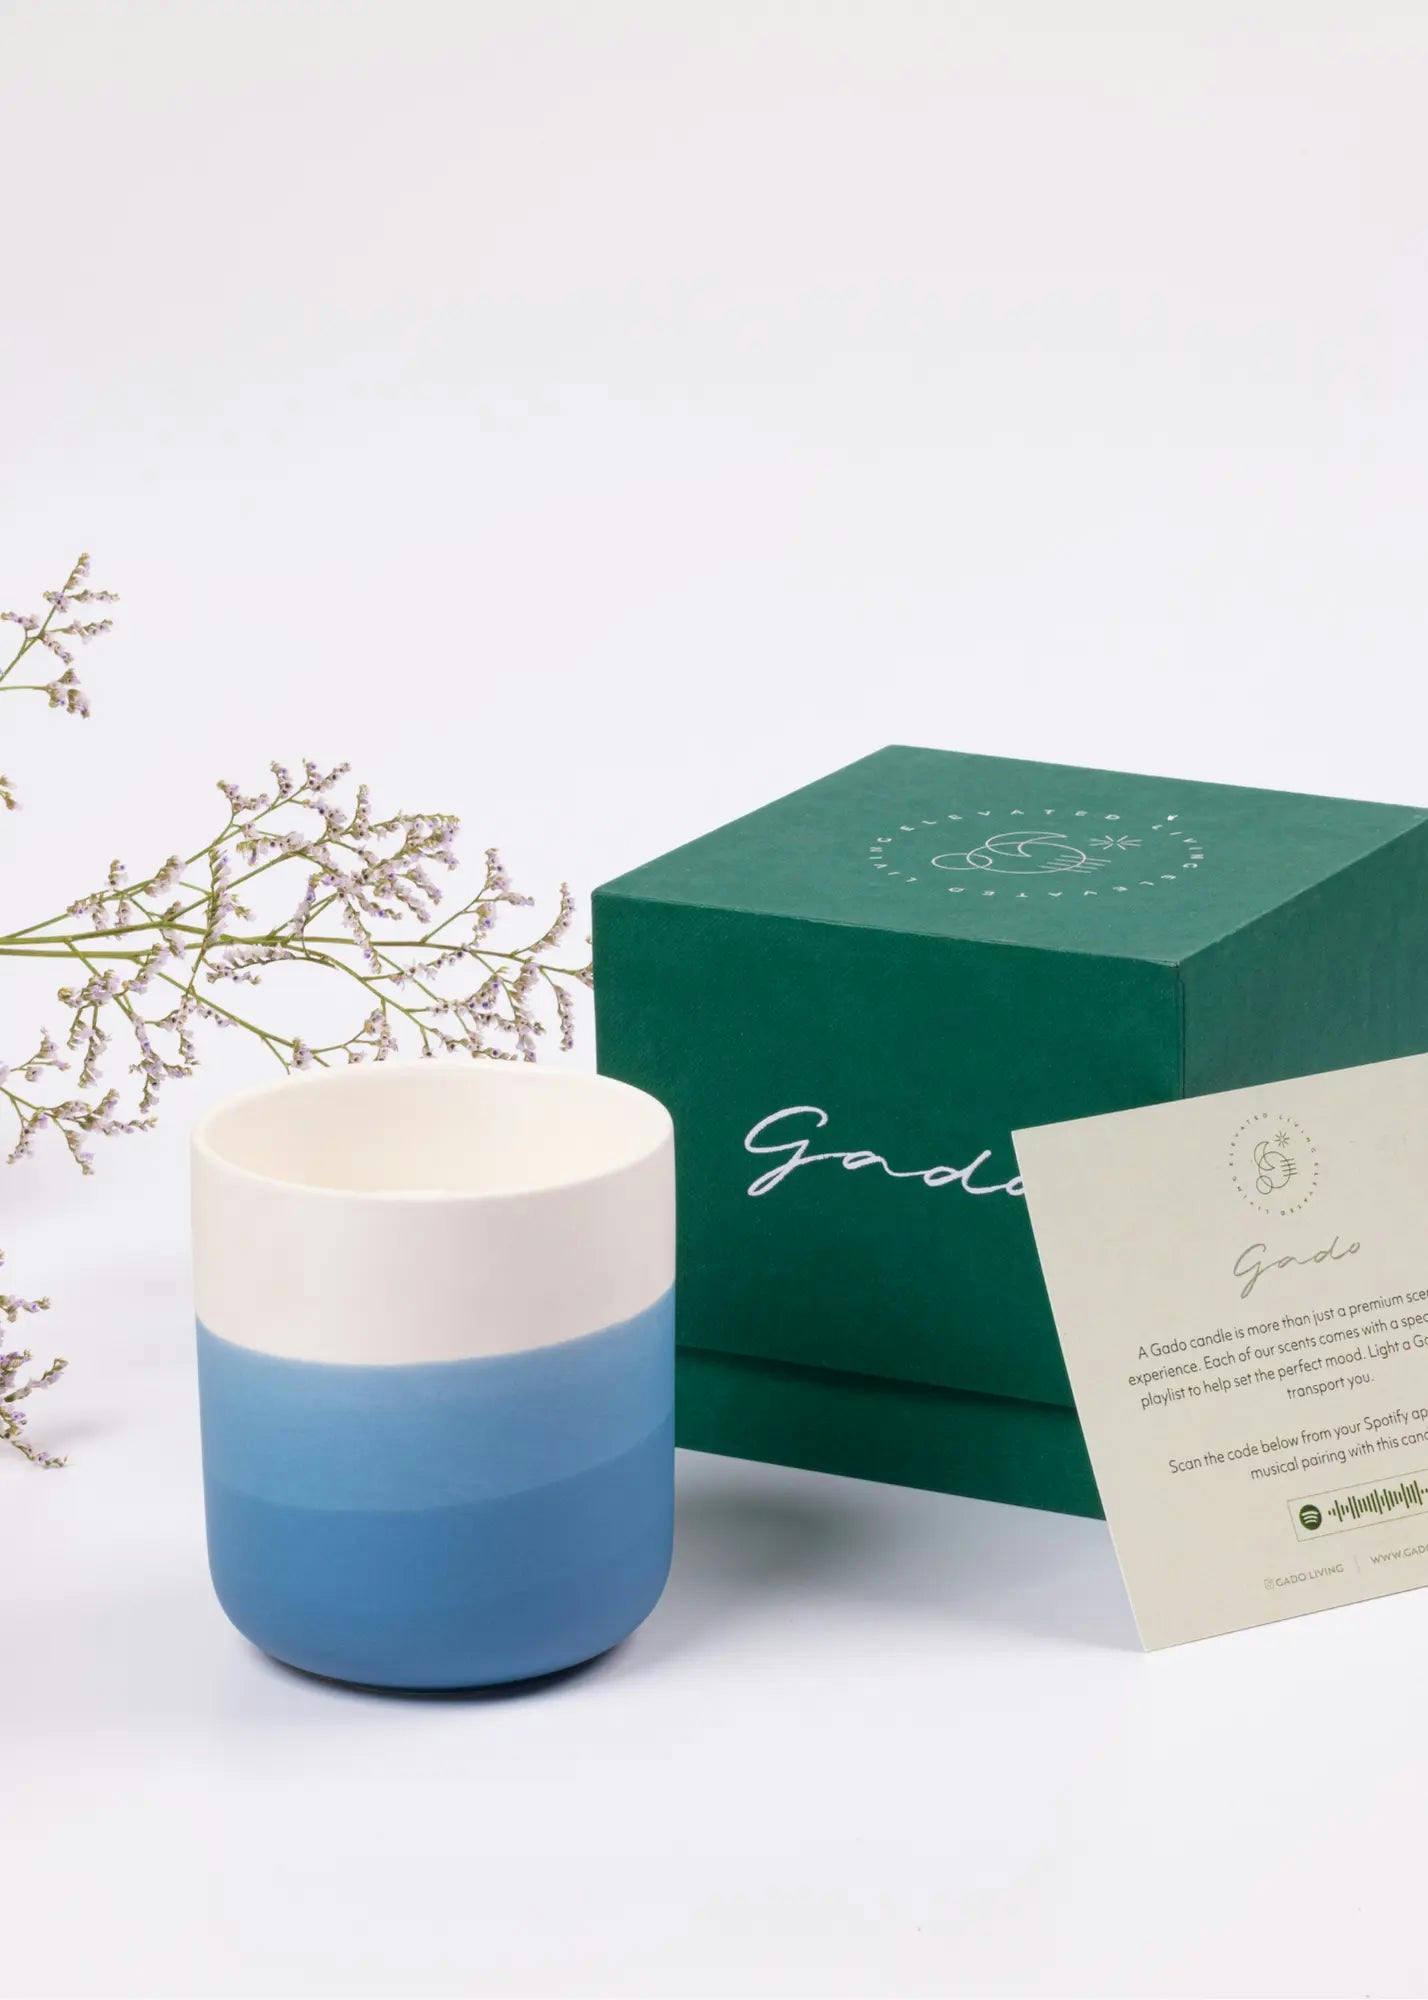 Leora Candle - Oak & Vanilla, a product by Gado Living